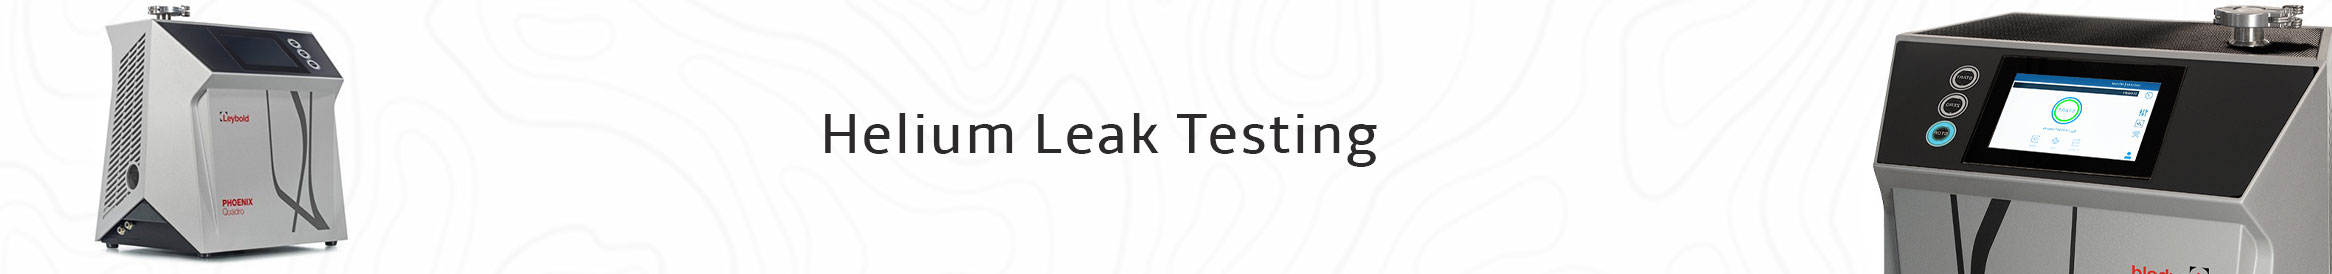 Helium Leak Testing | Non-destructive Quality Control Testing